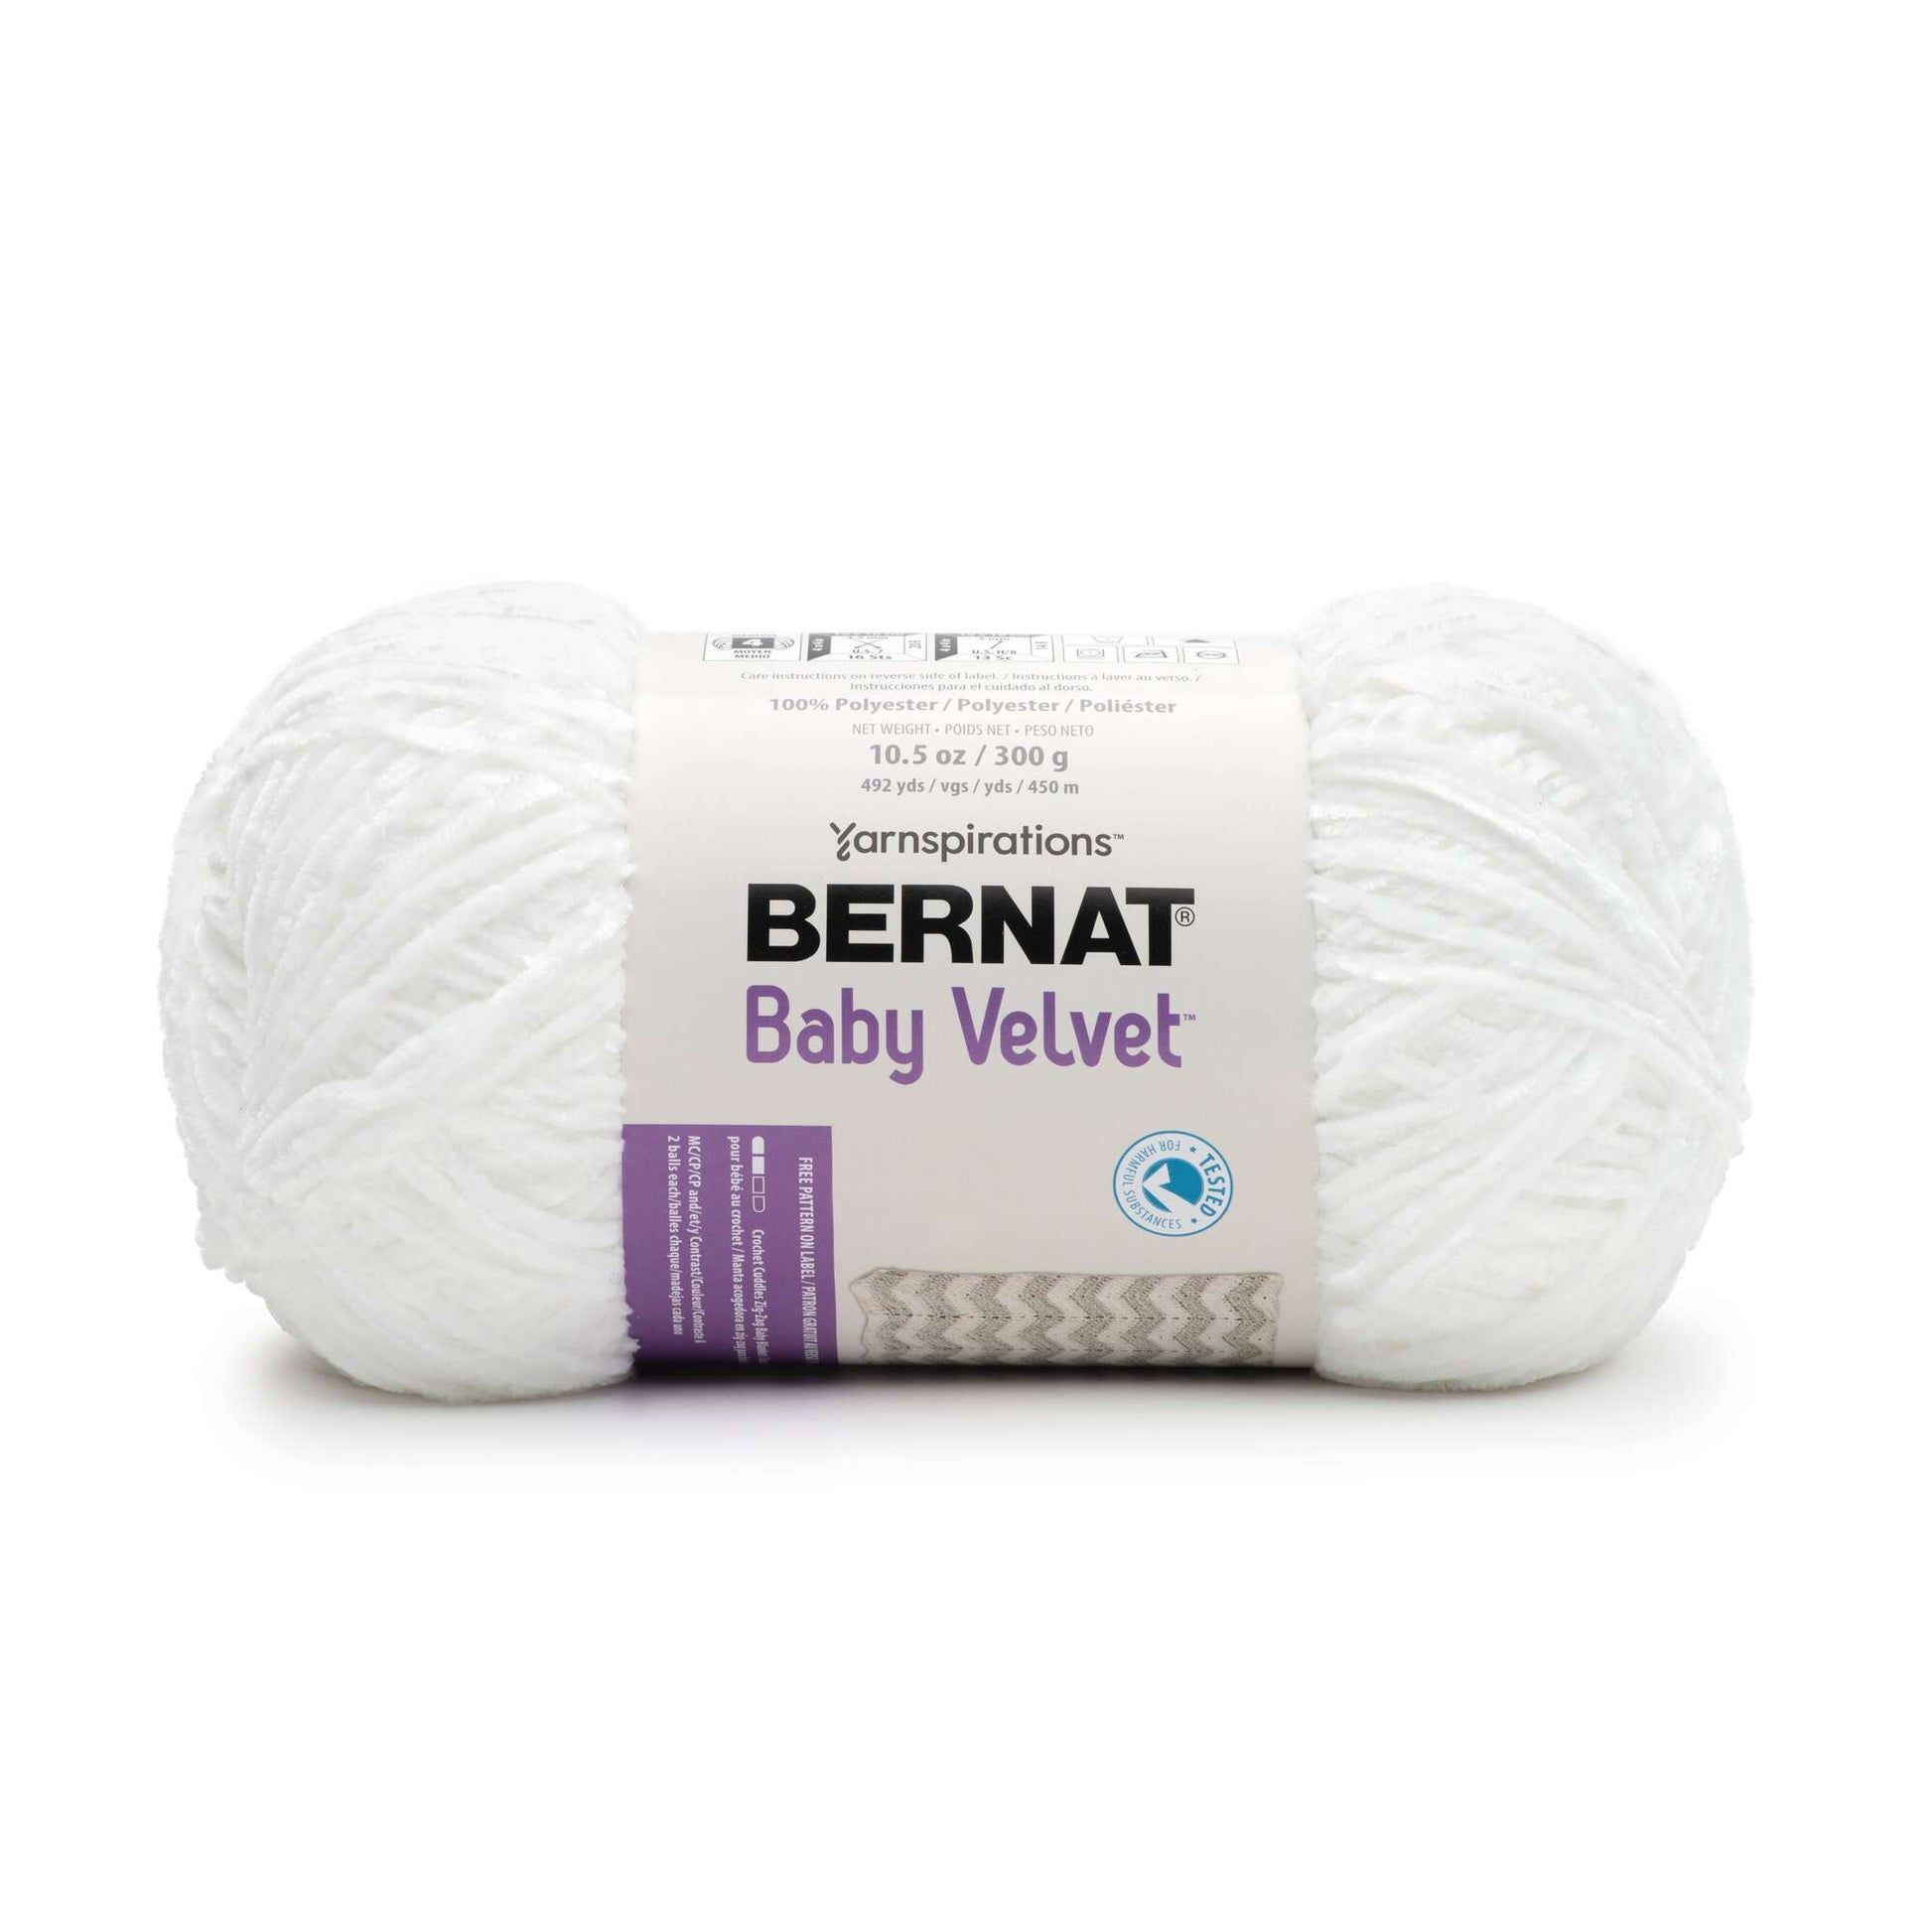 Bernat Baby Velvet Yarn (300g/10.5oz) Snowy White